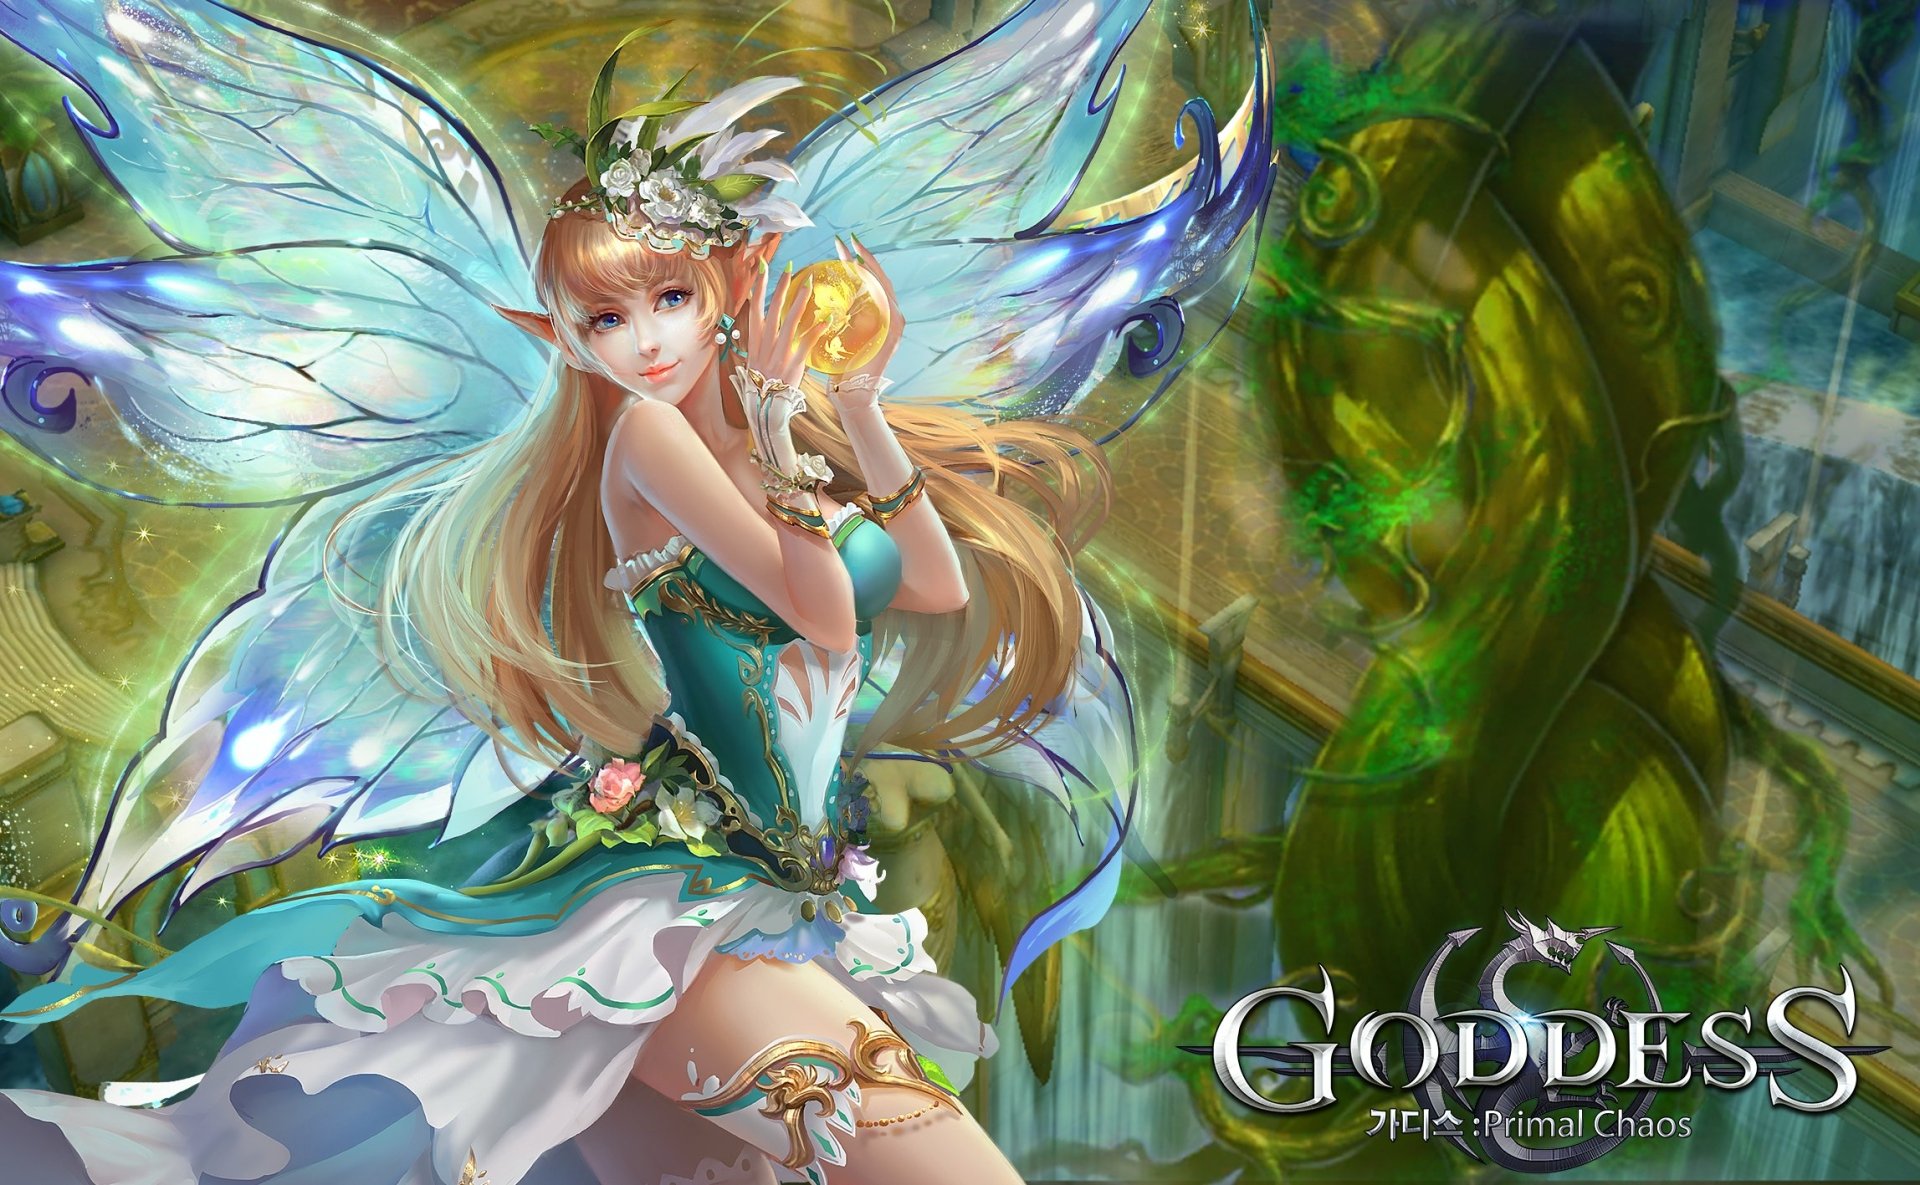 General 1920x1185 Goddess: Primal Chaos video game girls PC gaming fantasy art fantasy girl pointy ears wings long hair blonde dress smiling